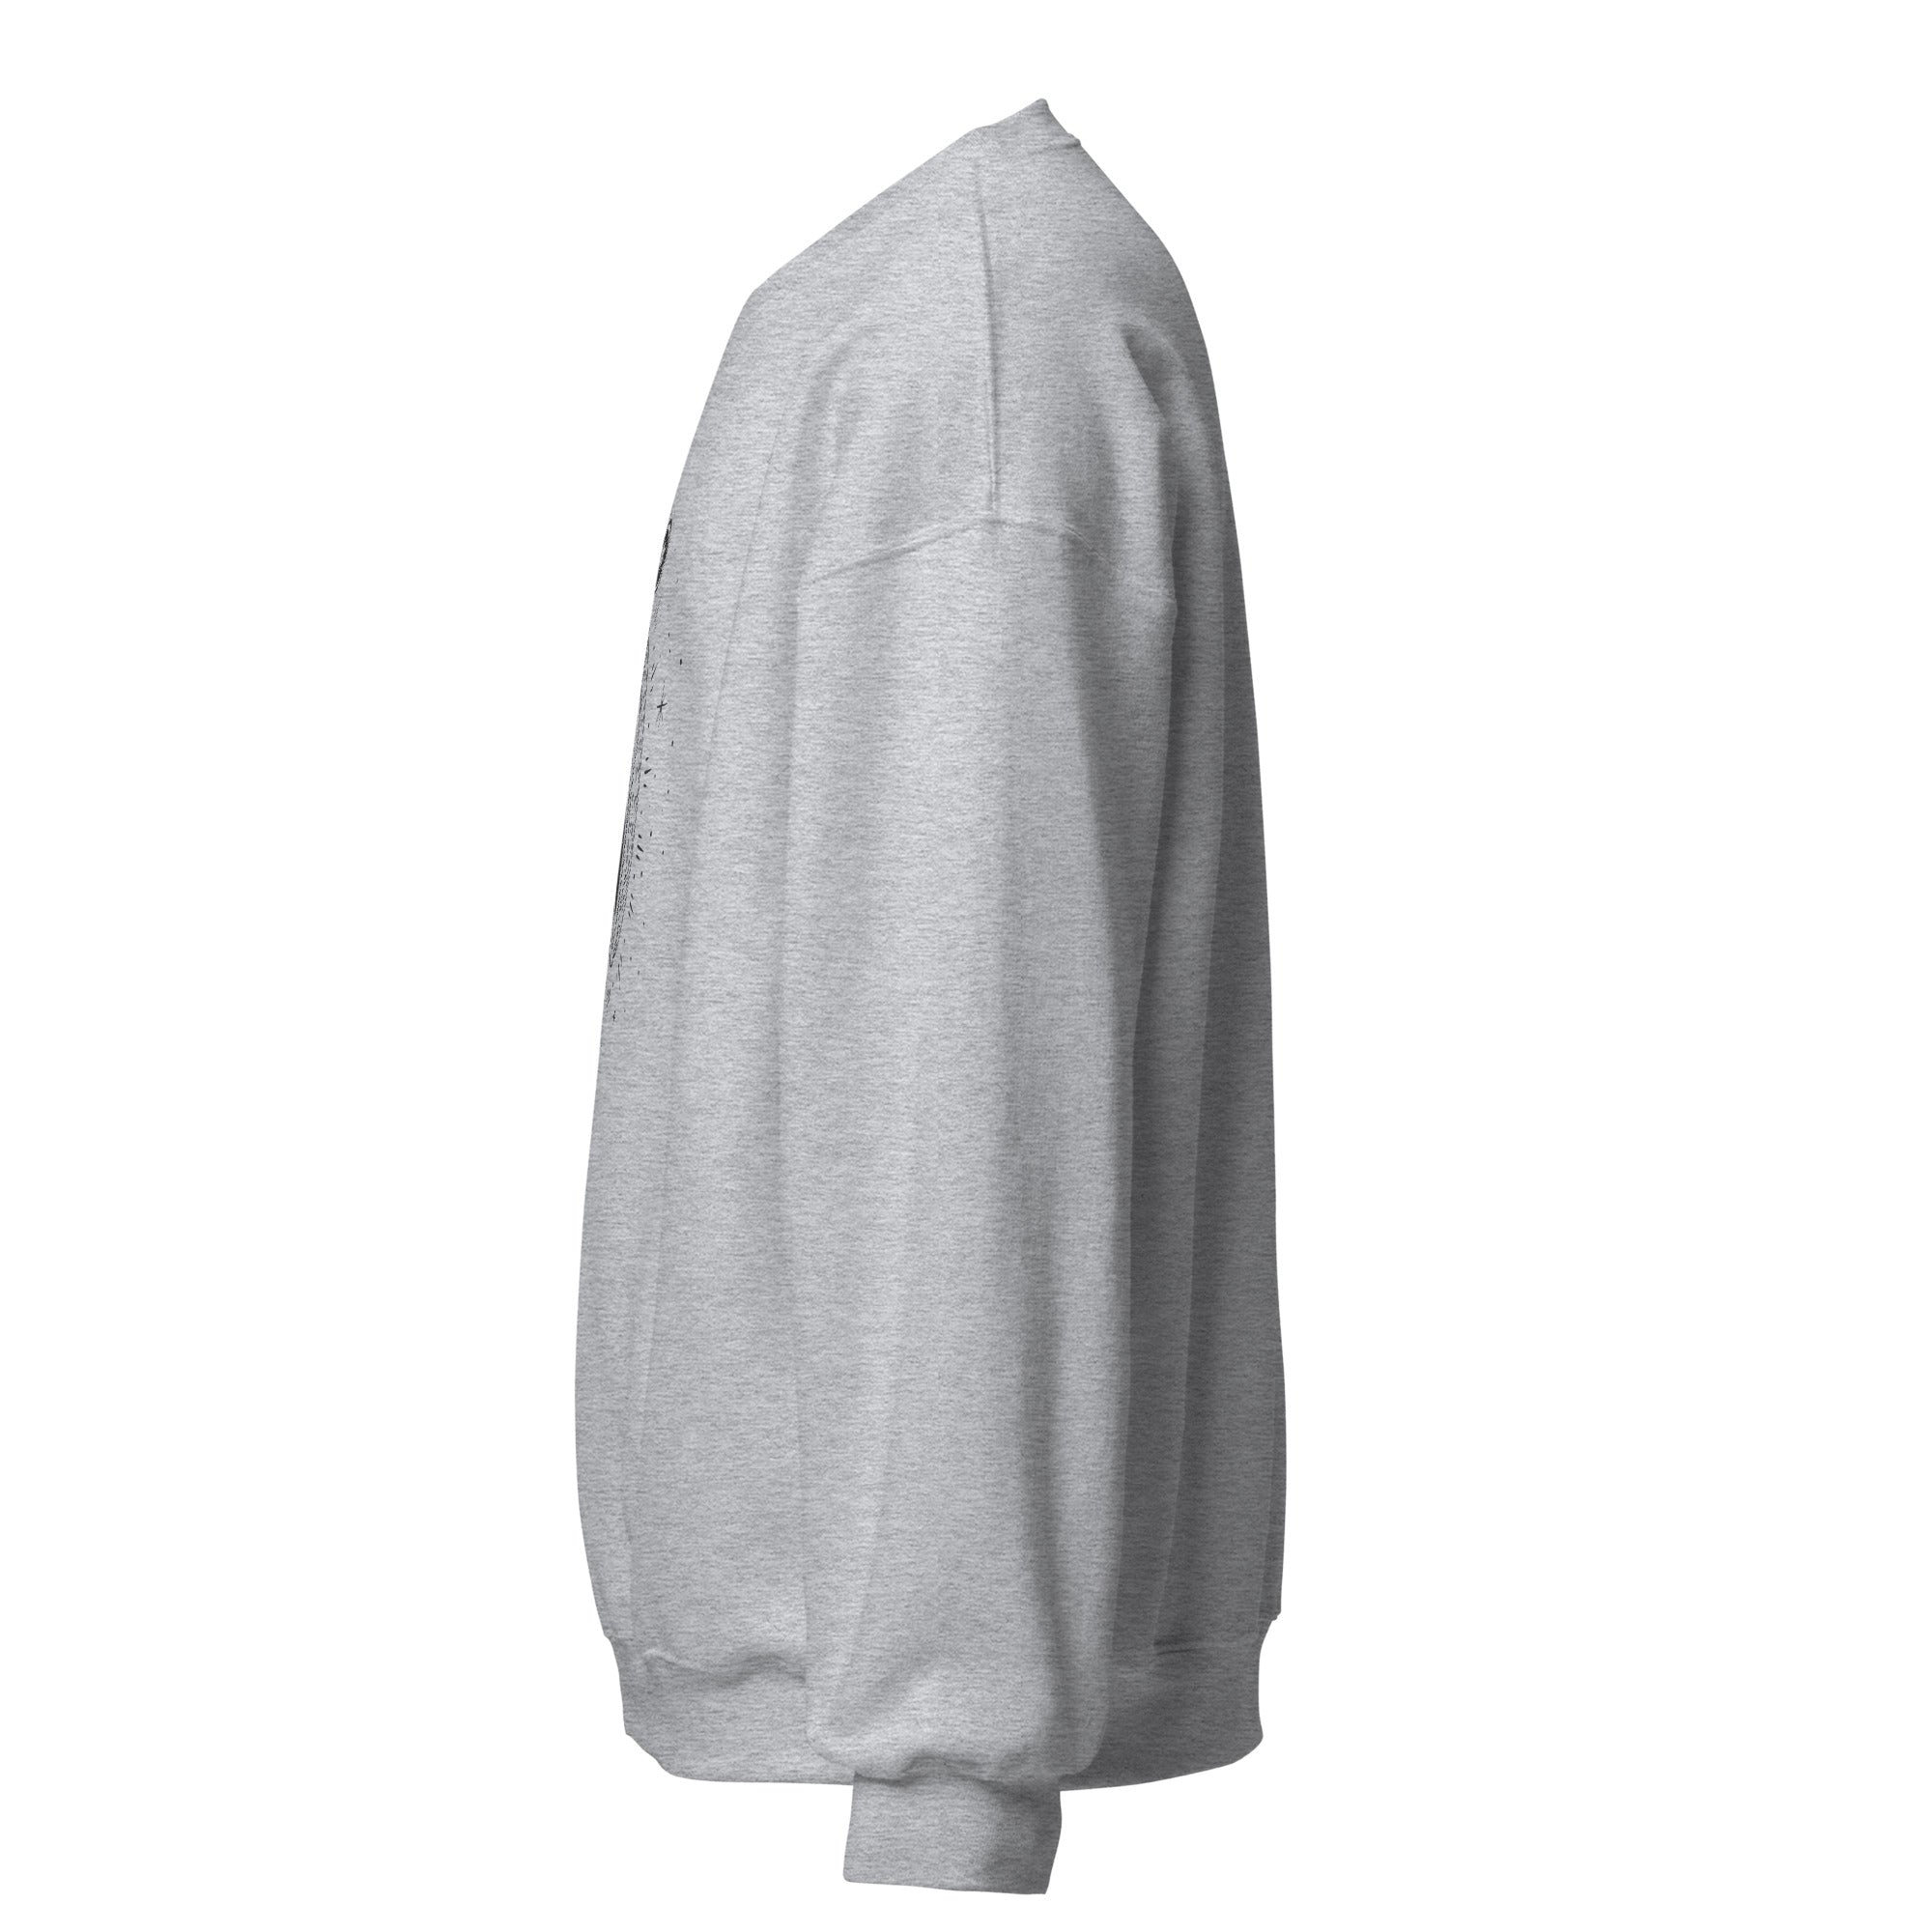 Space Vulva Unisex Sweatshirt